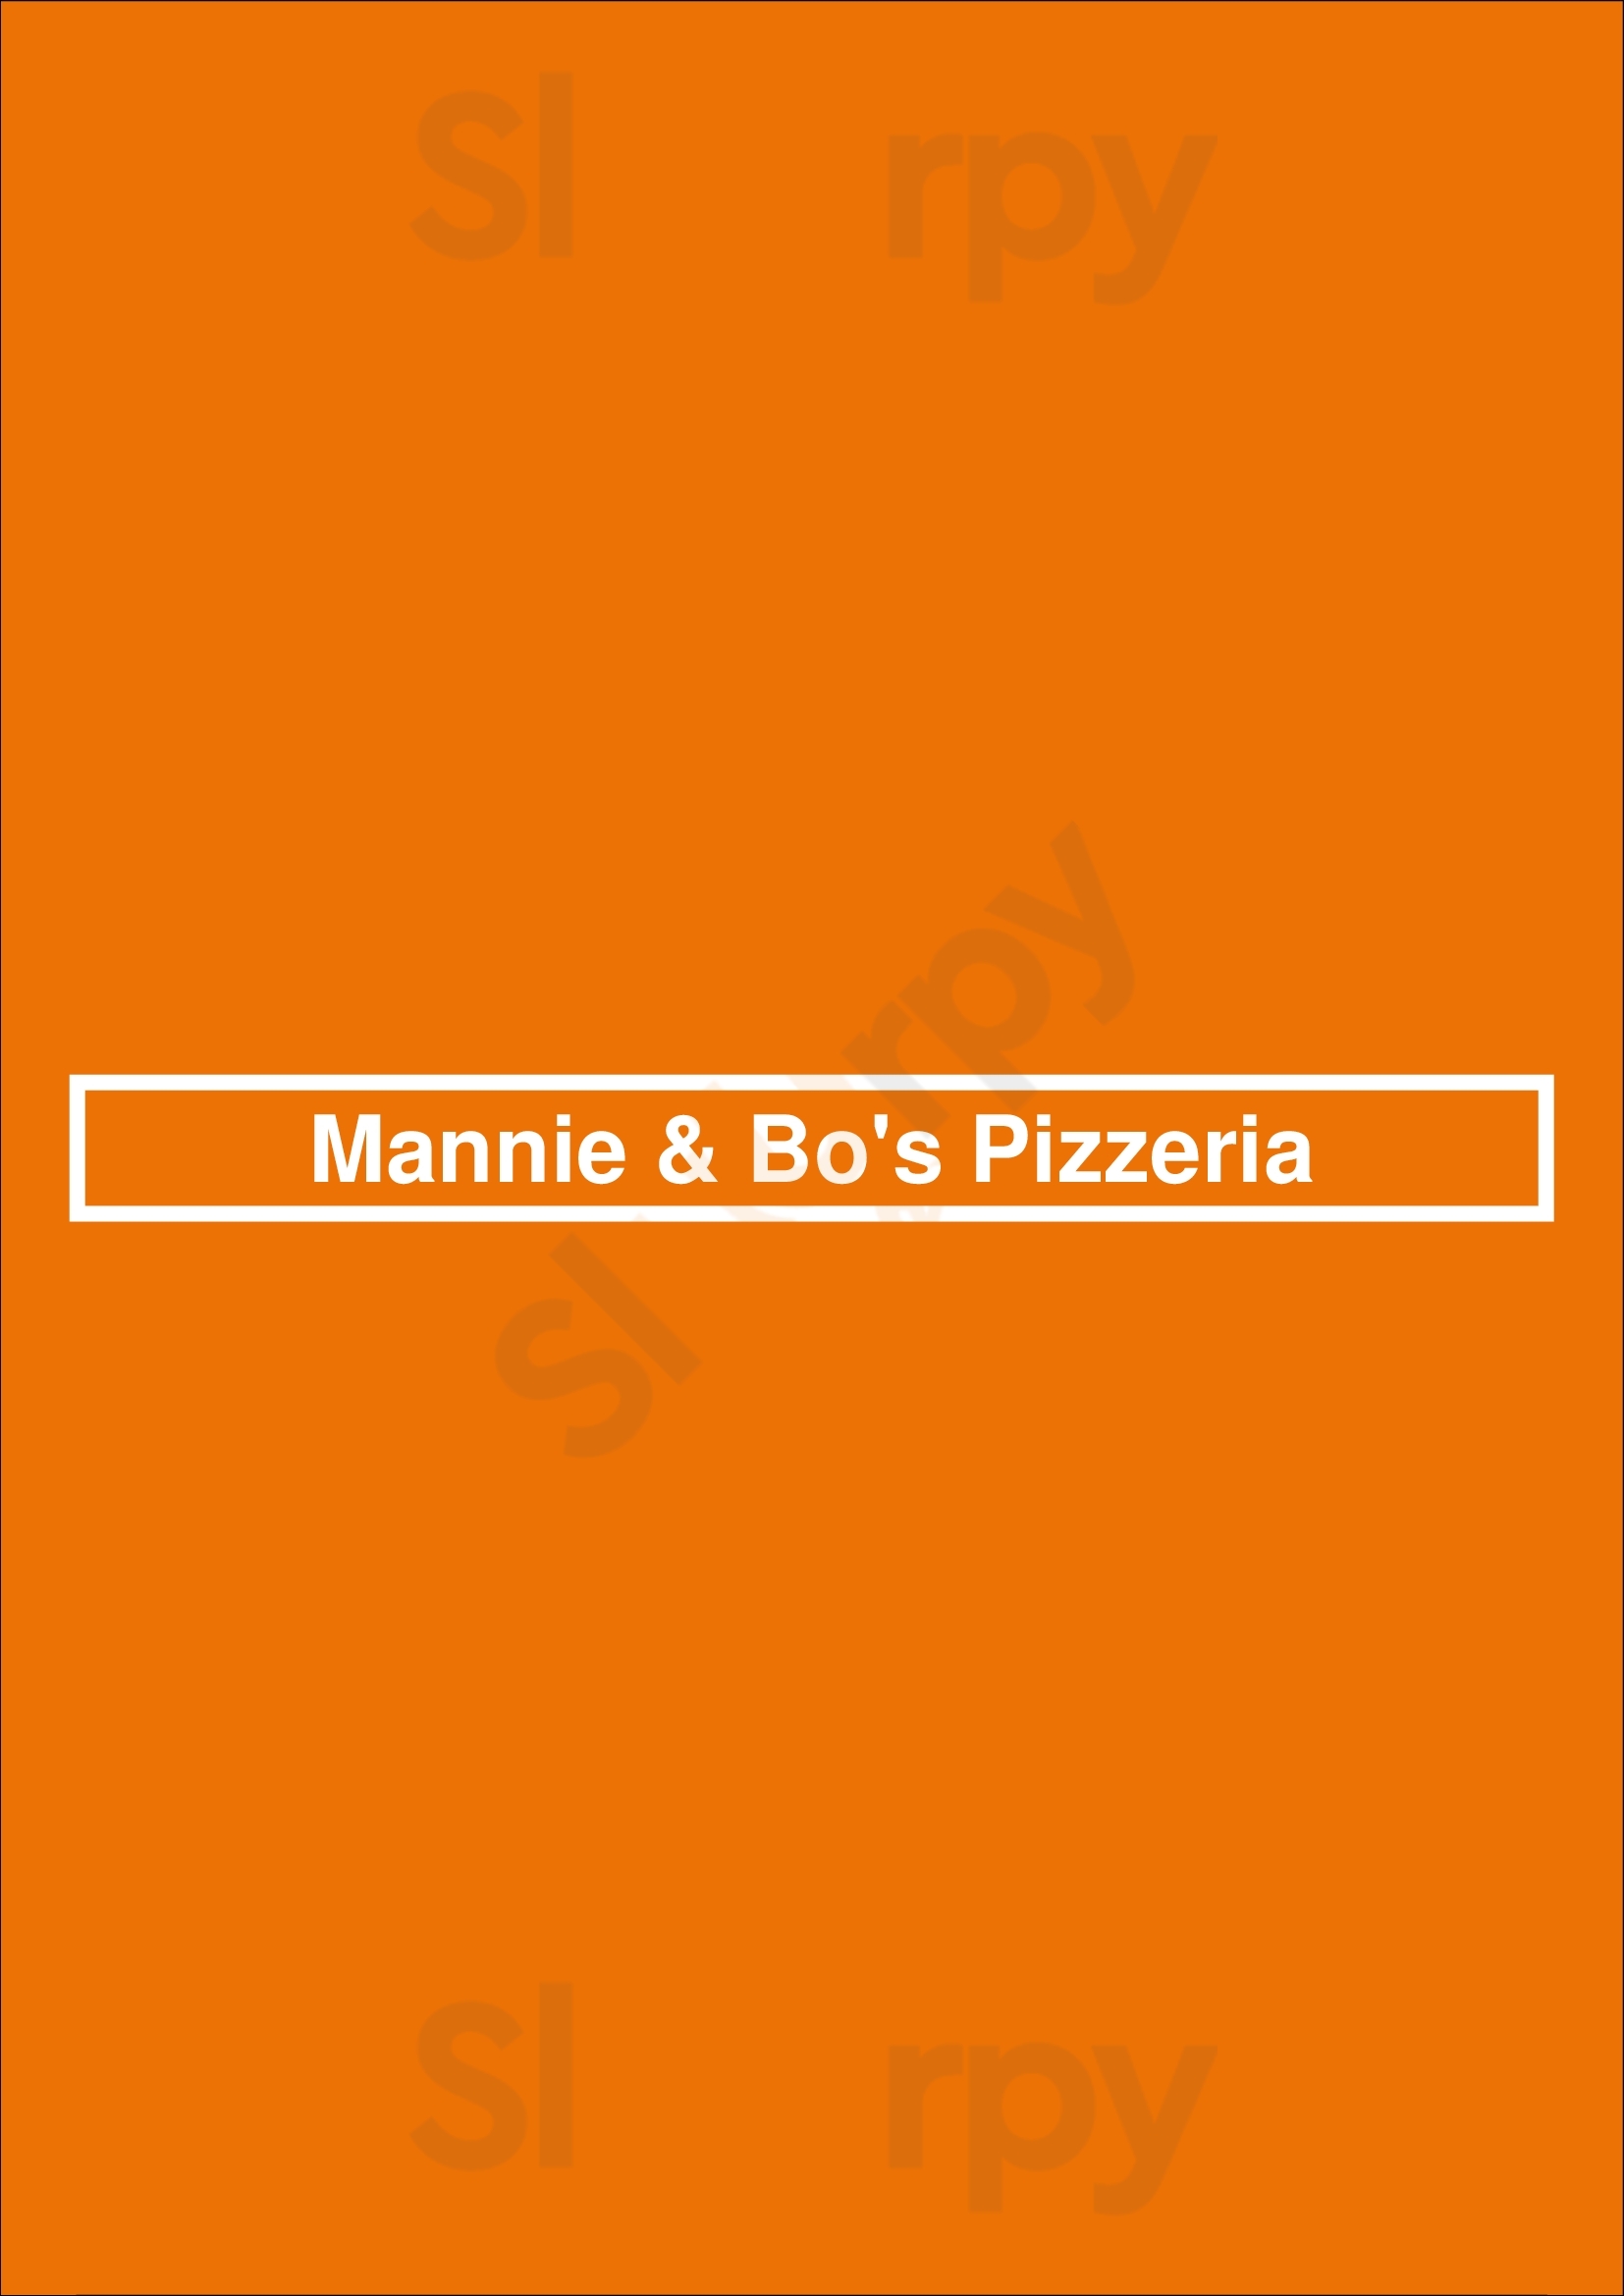 Mannie & Bo's Pizzeria Golden Menu - 1